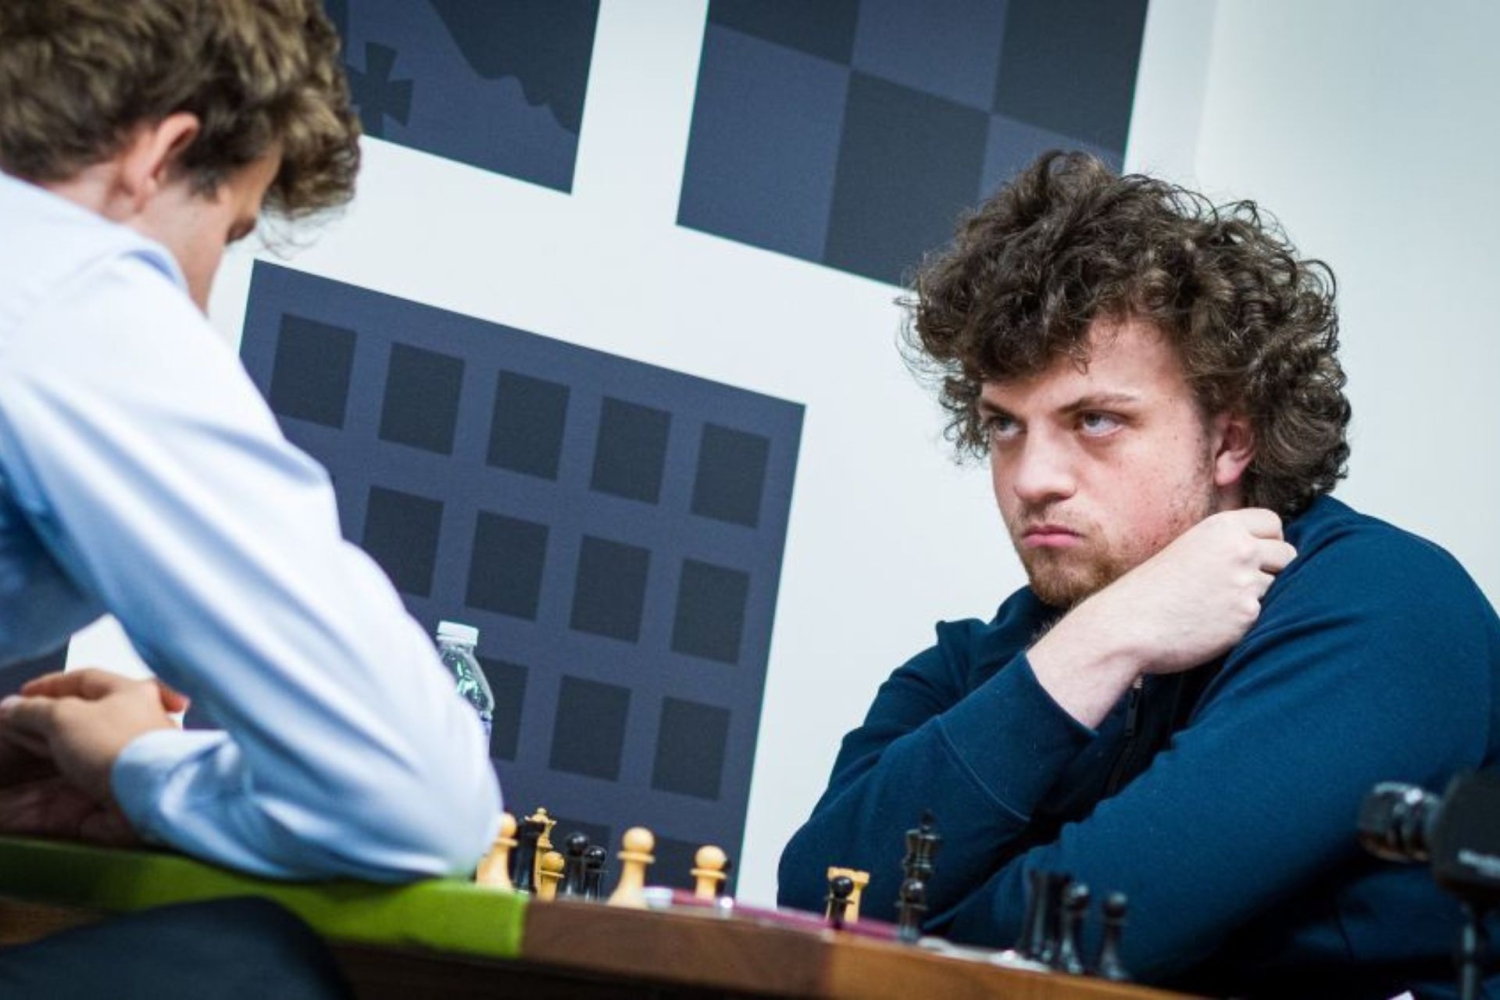 Hans strikes back at r/chess : r/chess